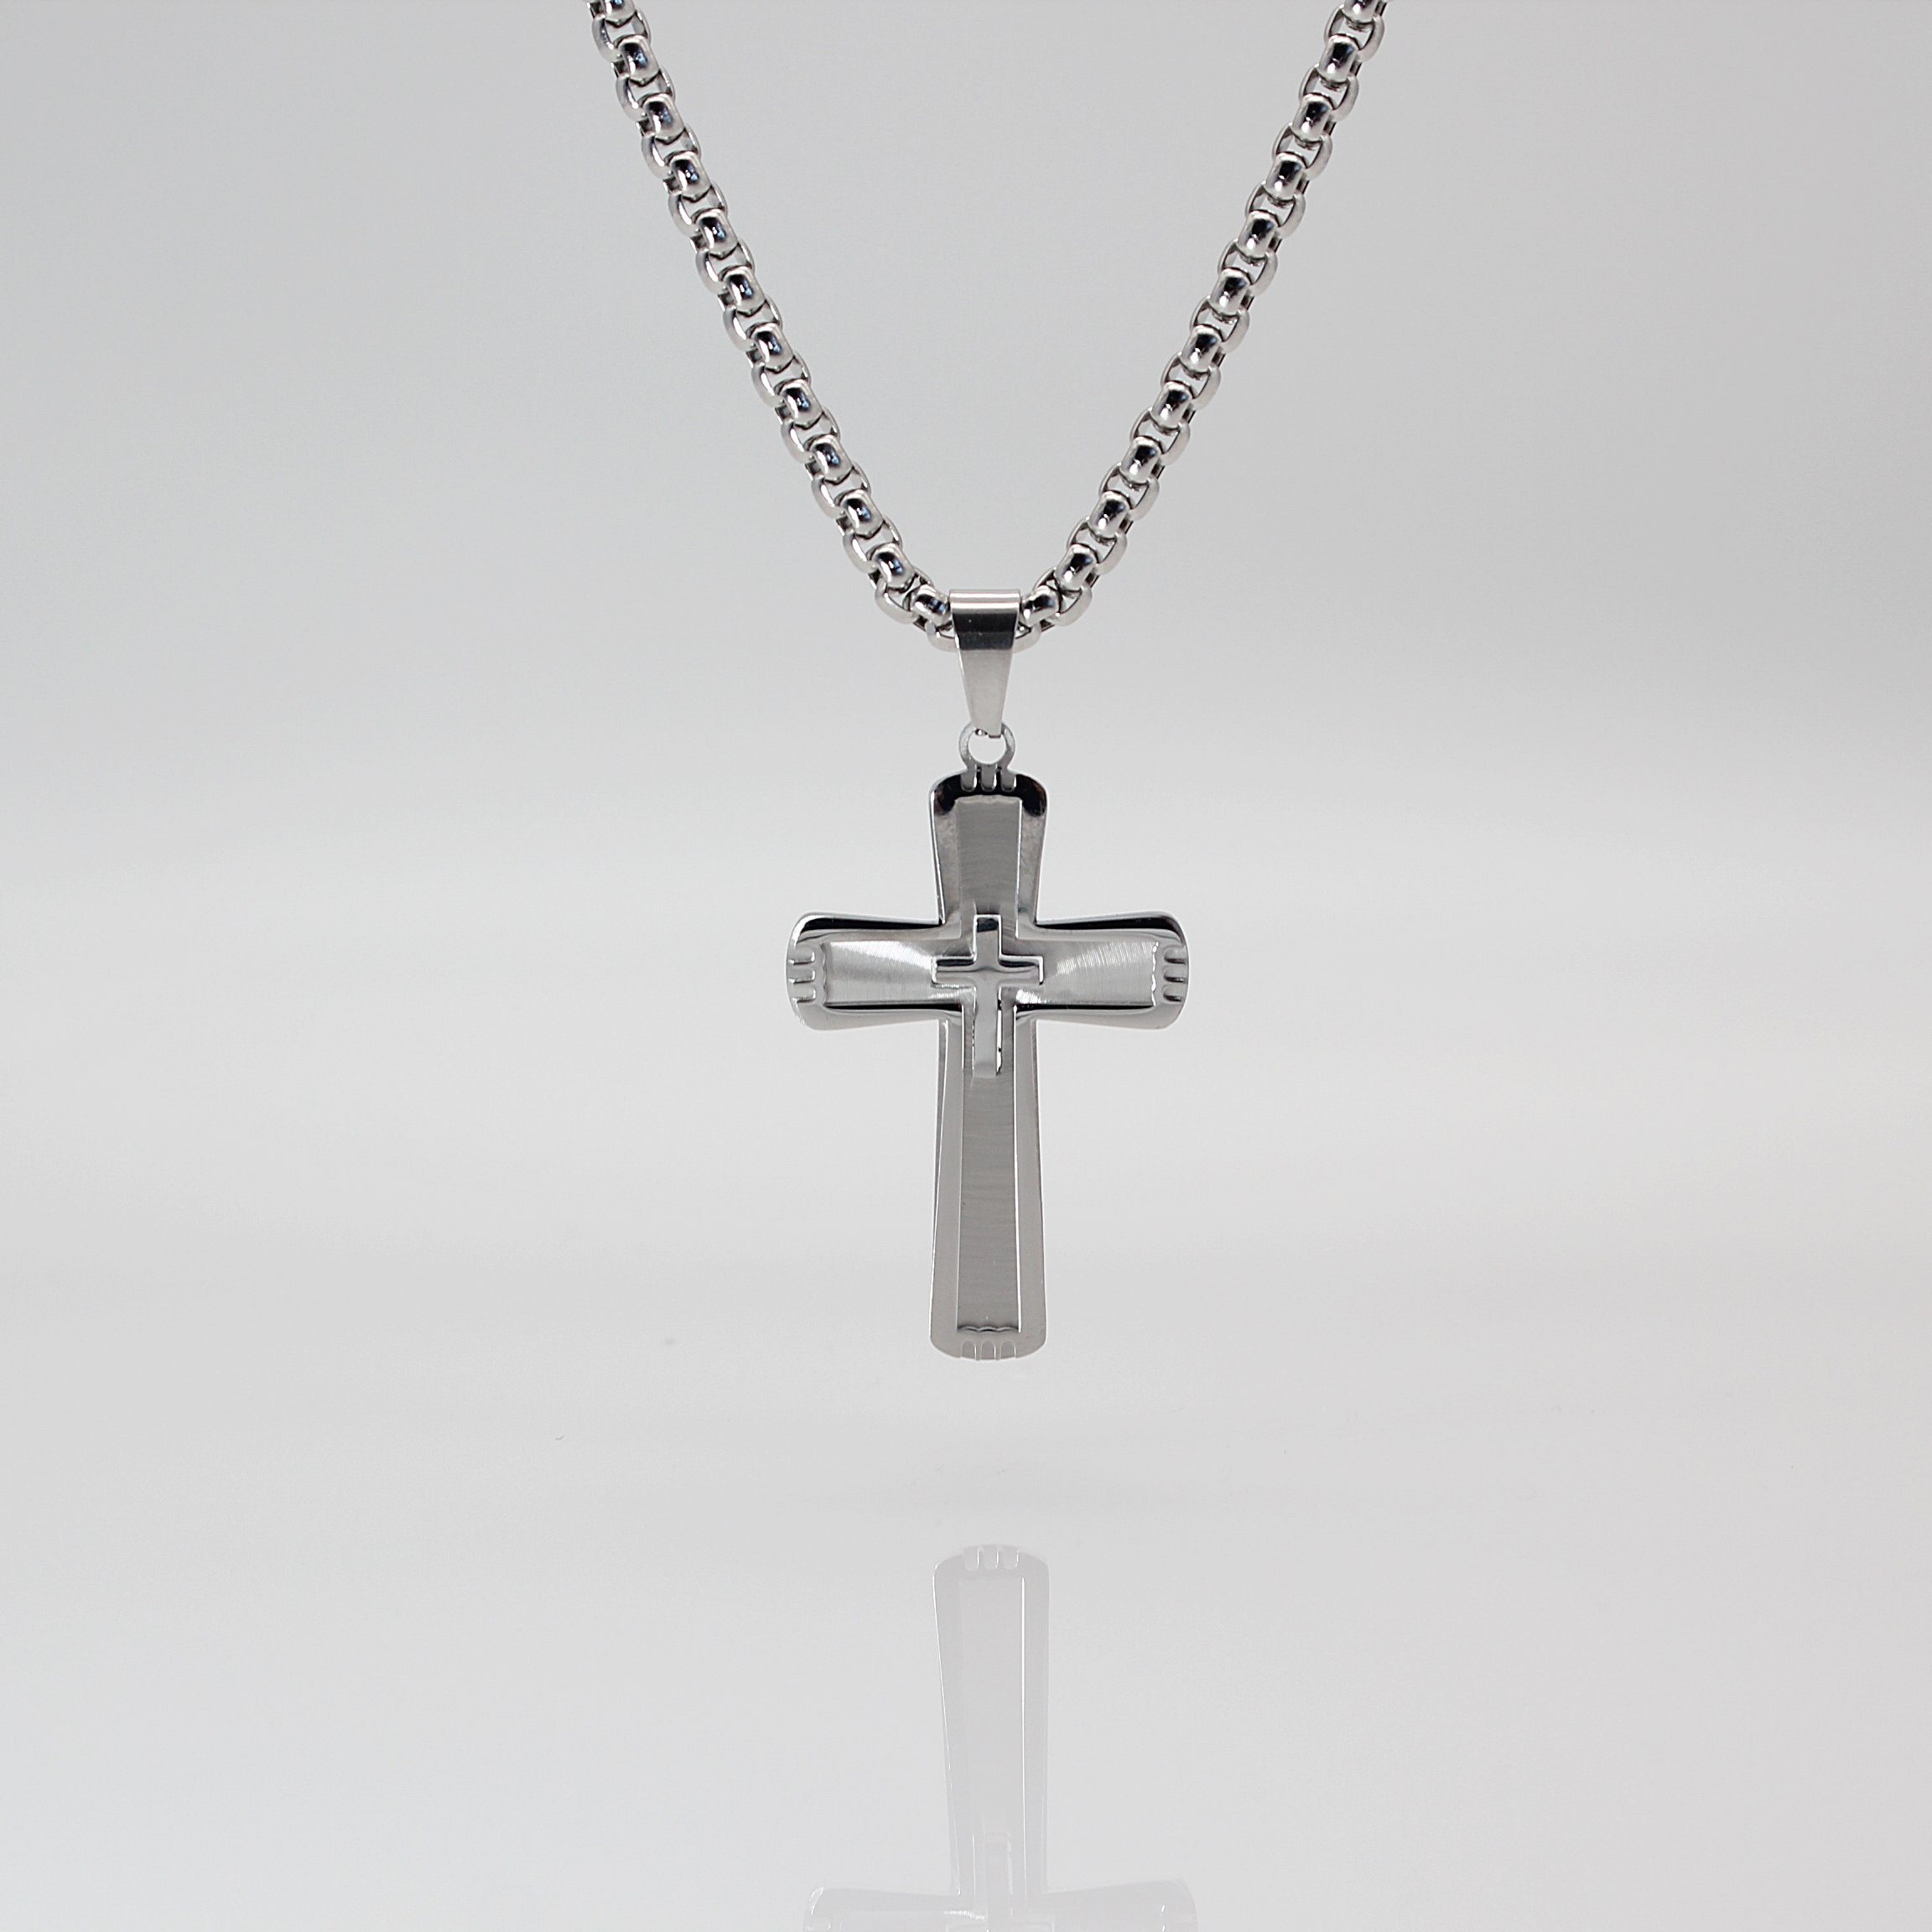 ELLAWIL Kreuzkette Edelstahlkette Kette mit Jesus Kreuz Anhänger Halskette Kreuzschmuck (Kettenlänge 54 cm, Edelstahl), inklusive Geschenkschachtel